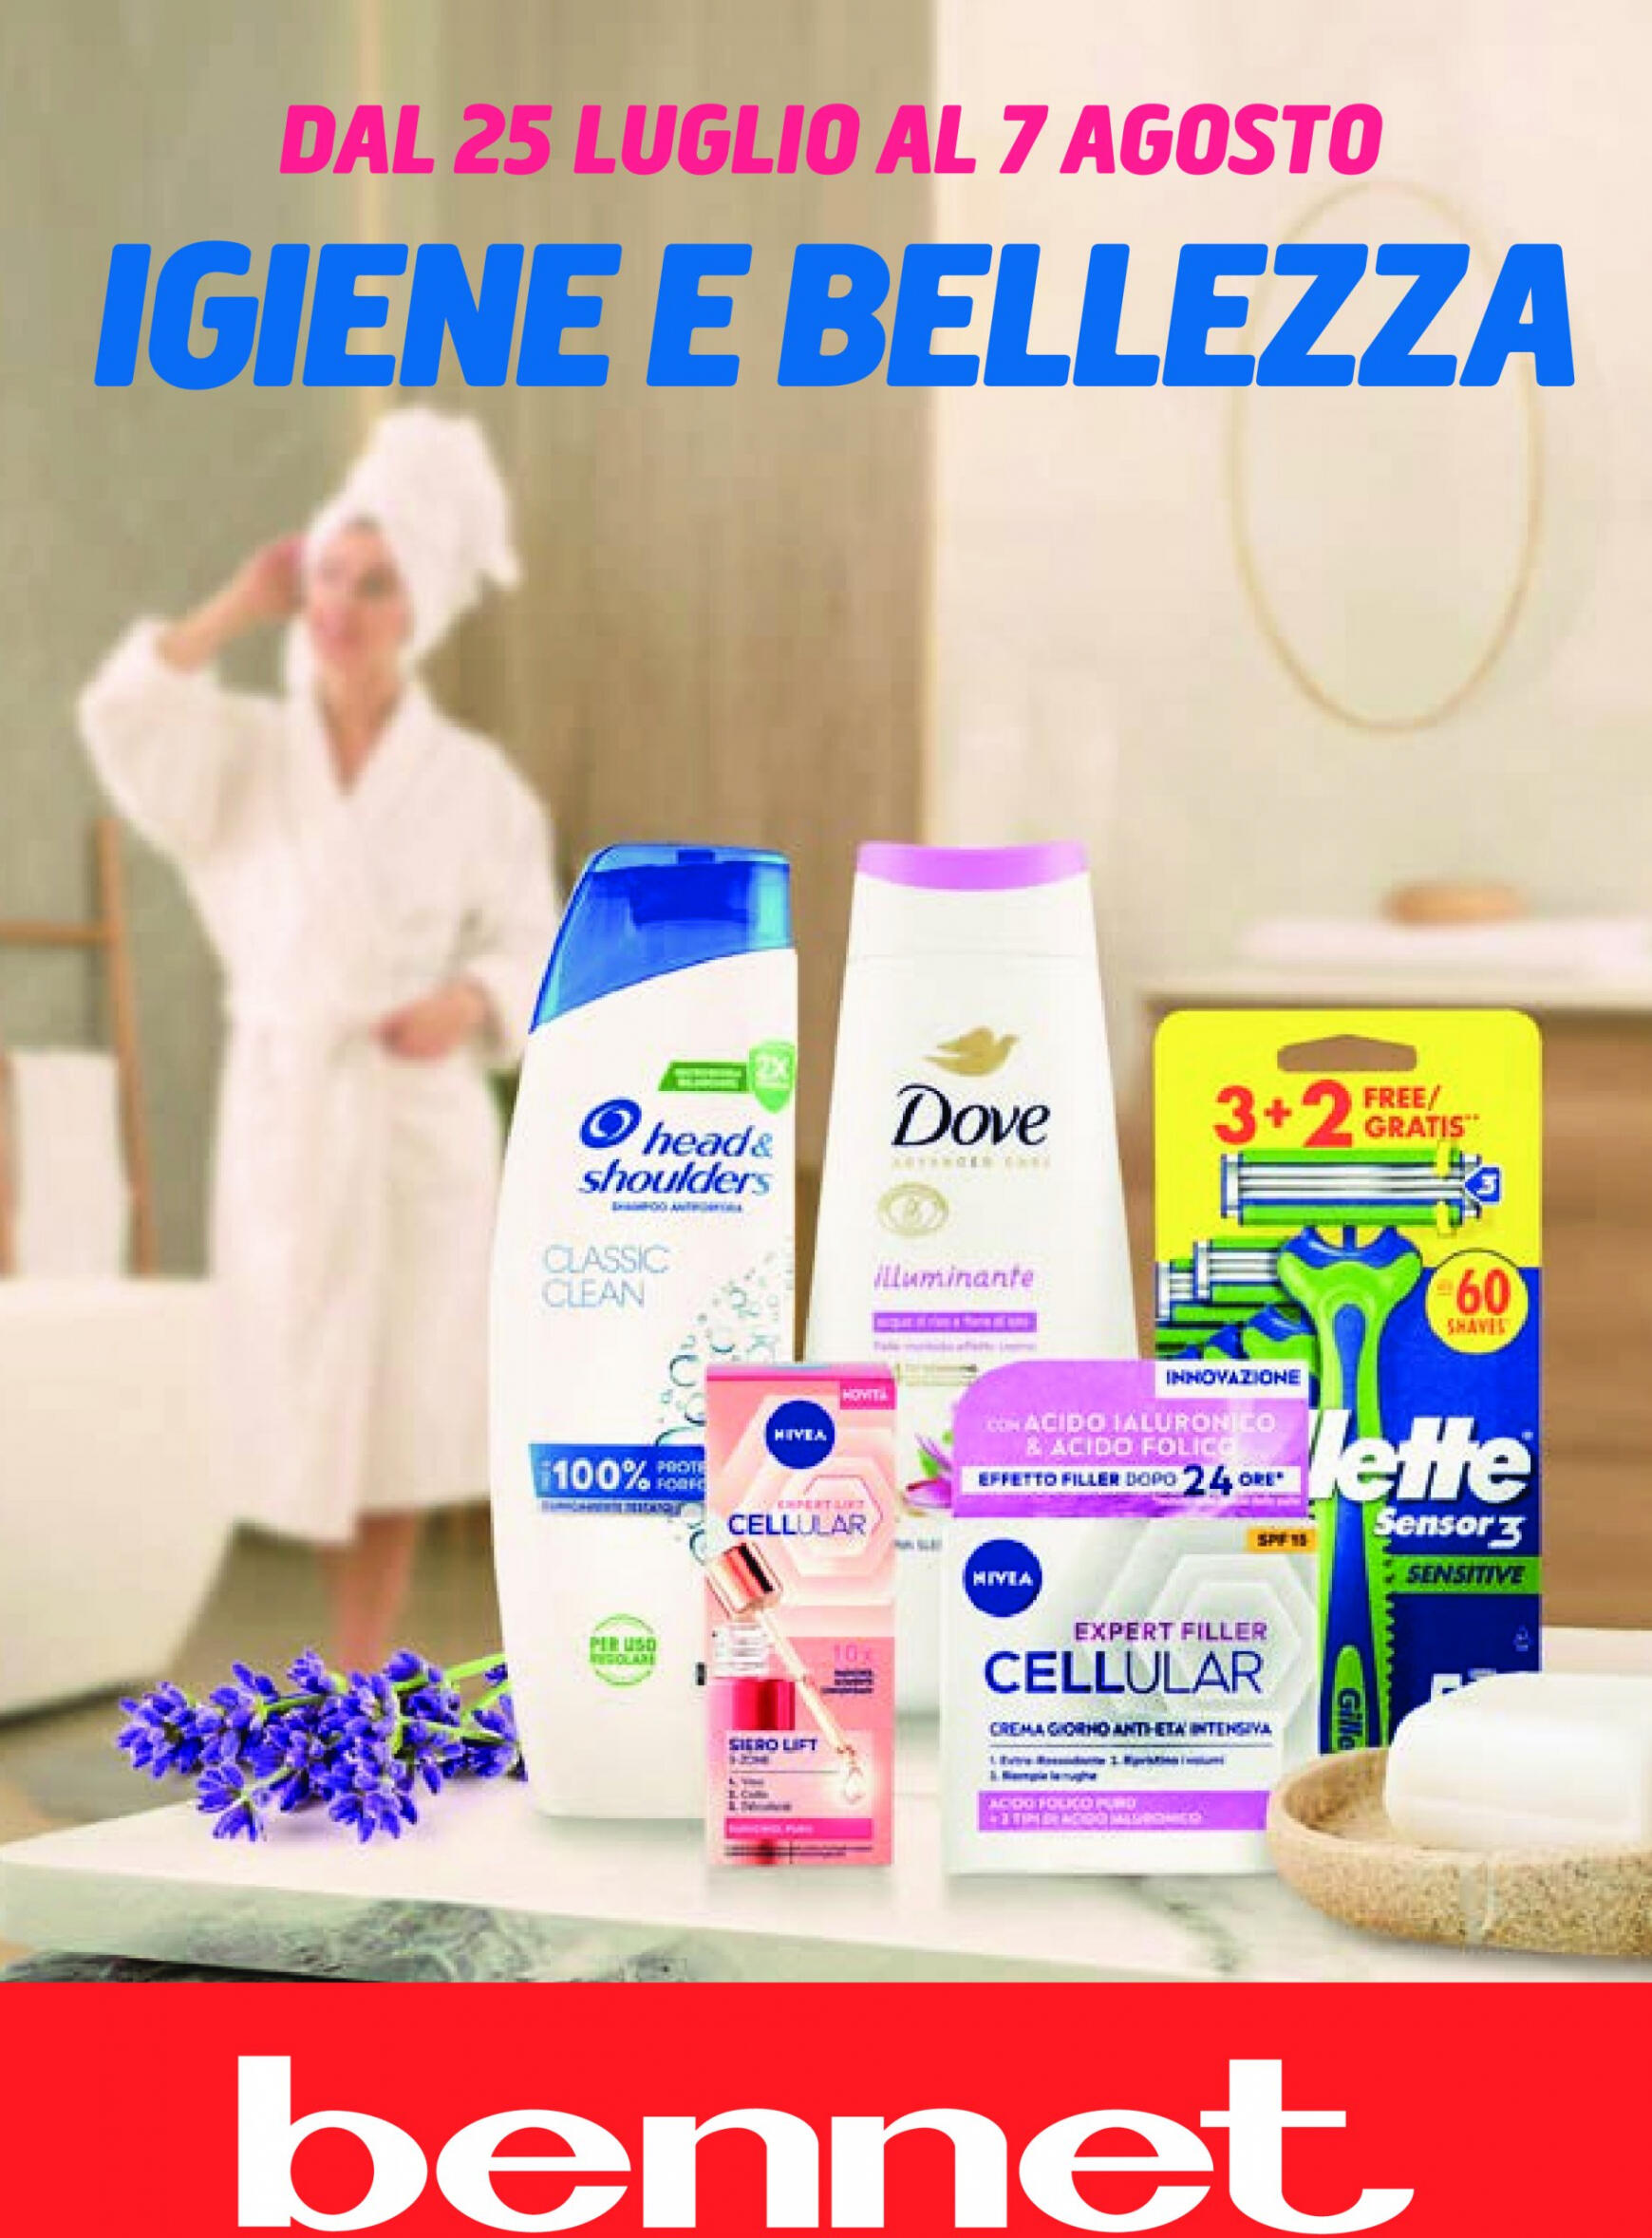 bennet - Nuovo volantino Bennet - Igiene e Bellezza 25.07. - 07.08.